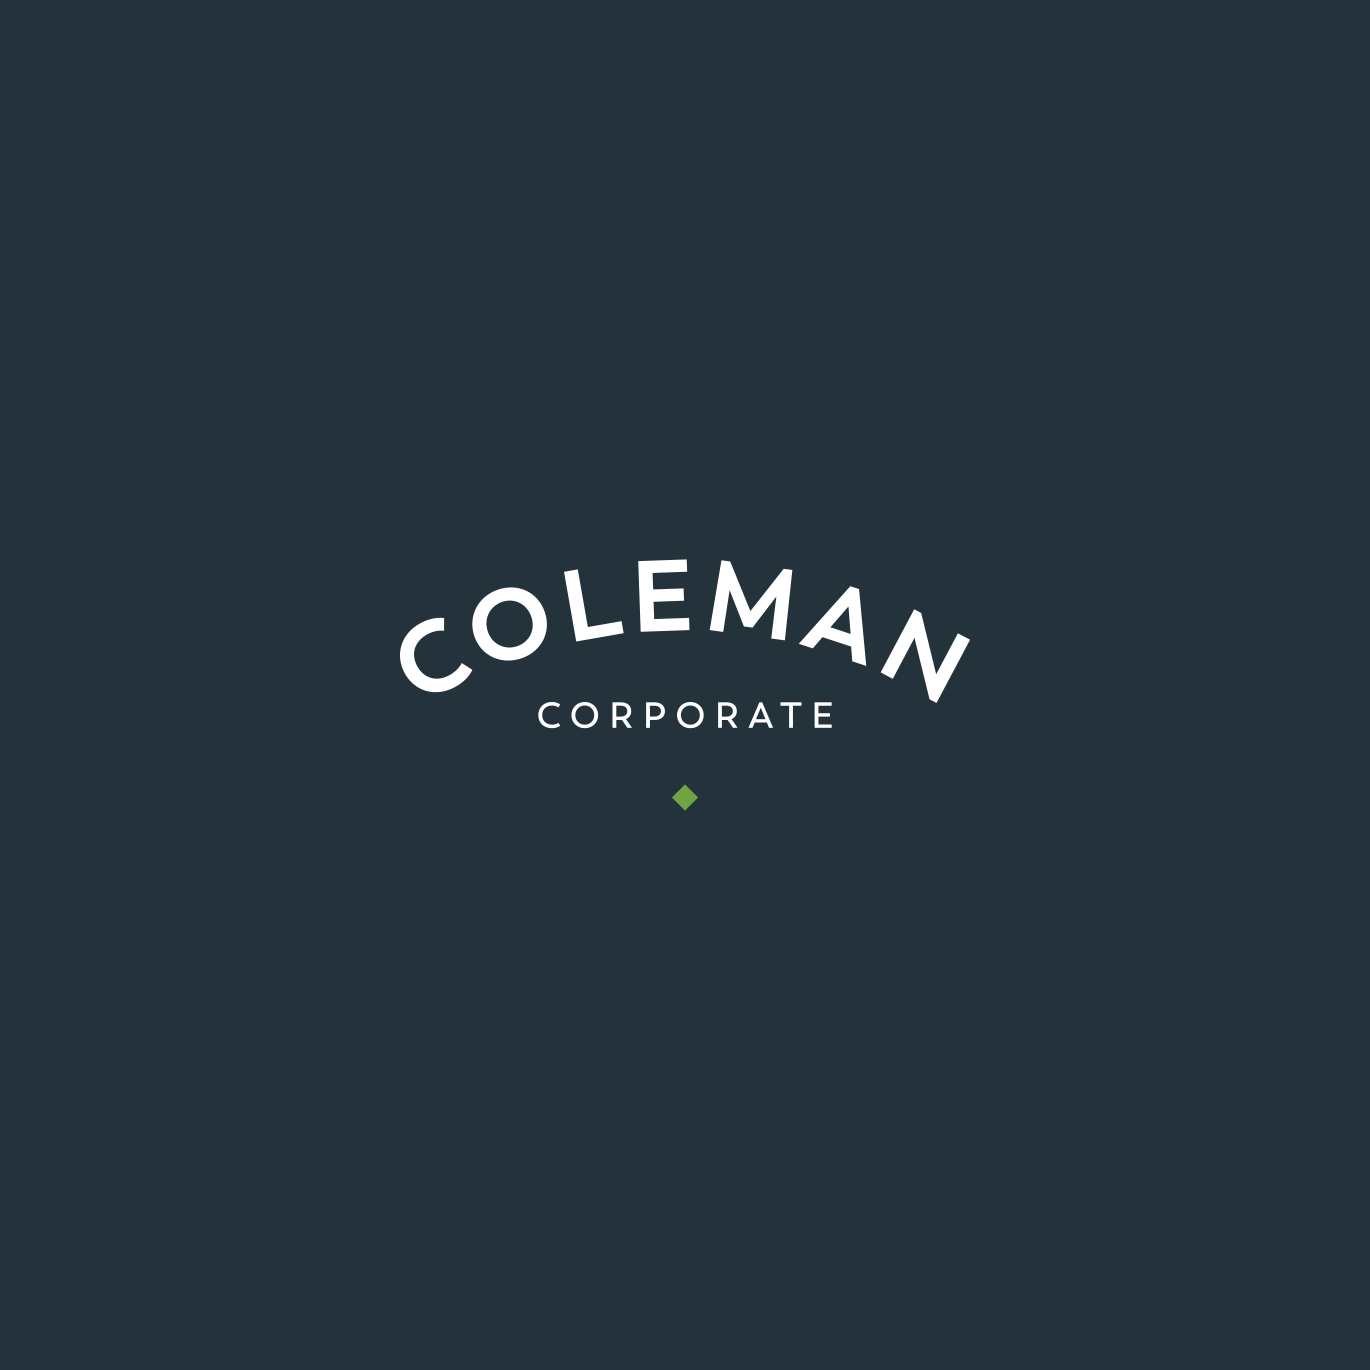 Coleman Corporate Logo